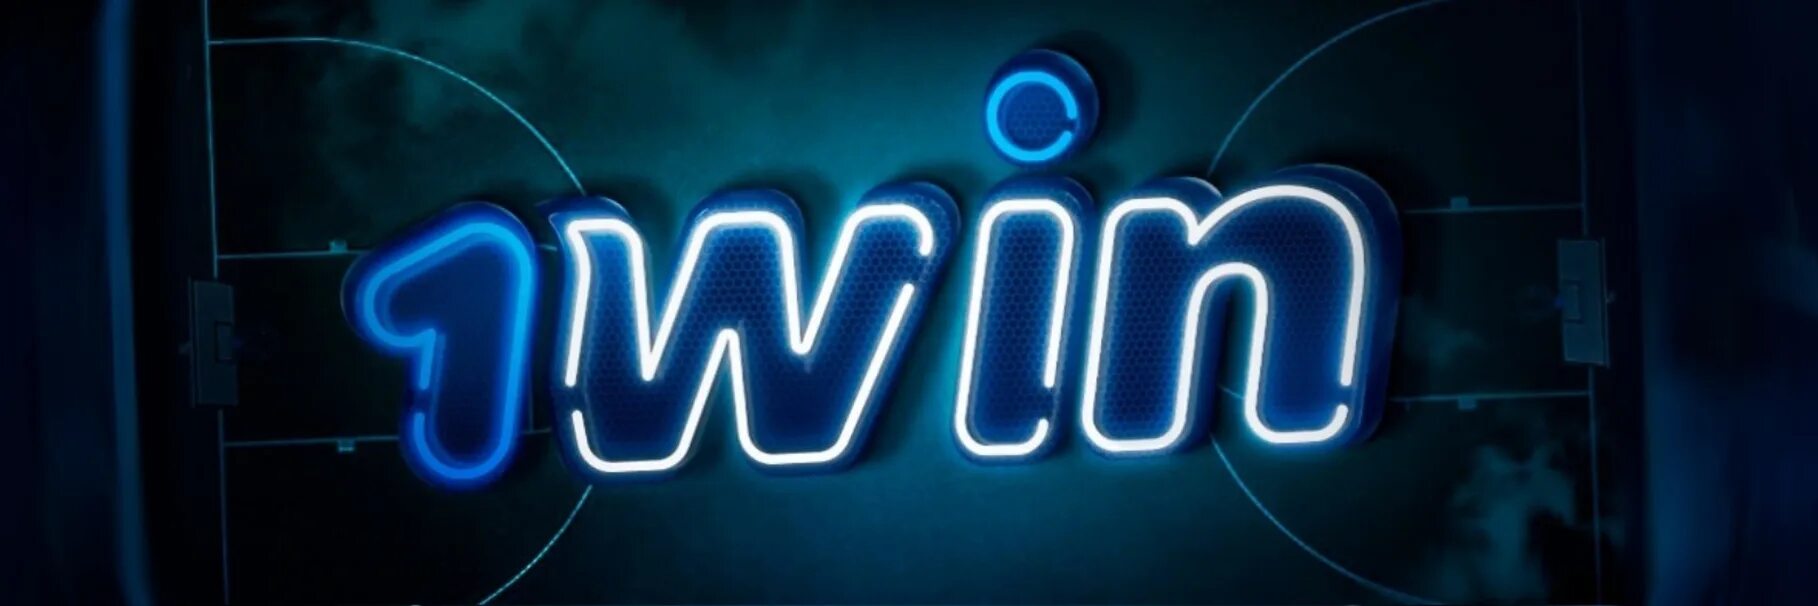 1win личный vk com дзен. 1win. 1win казино. 1win баннер. 1win логотип.